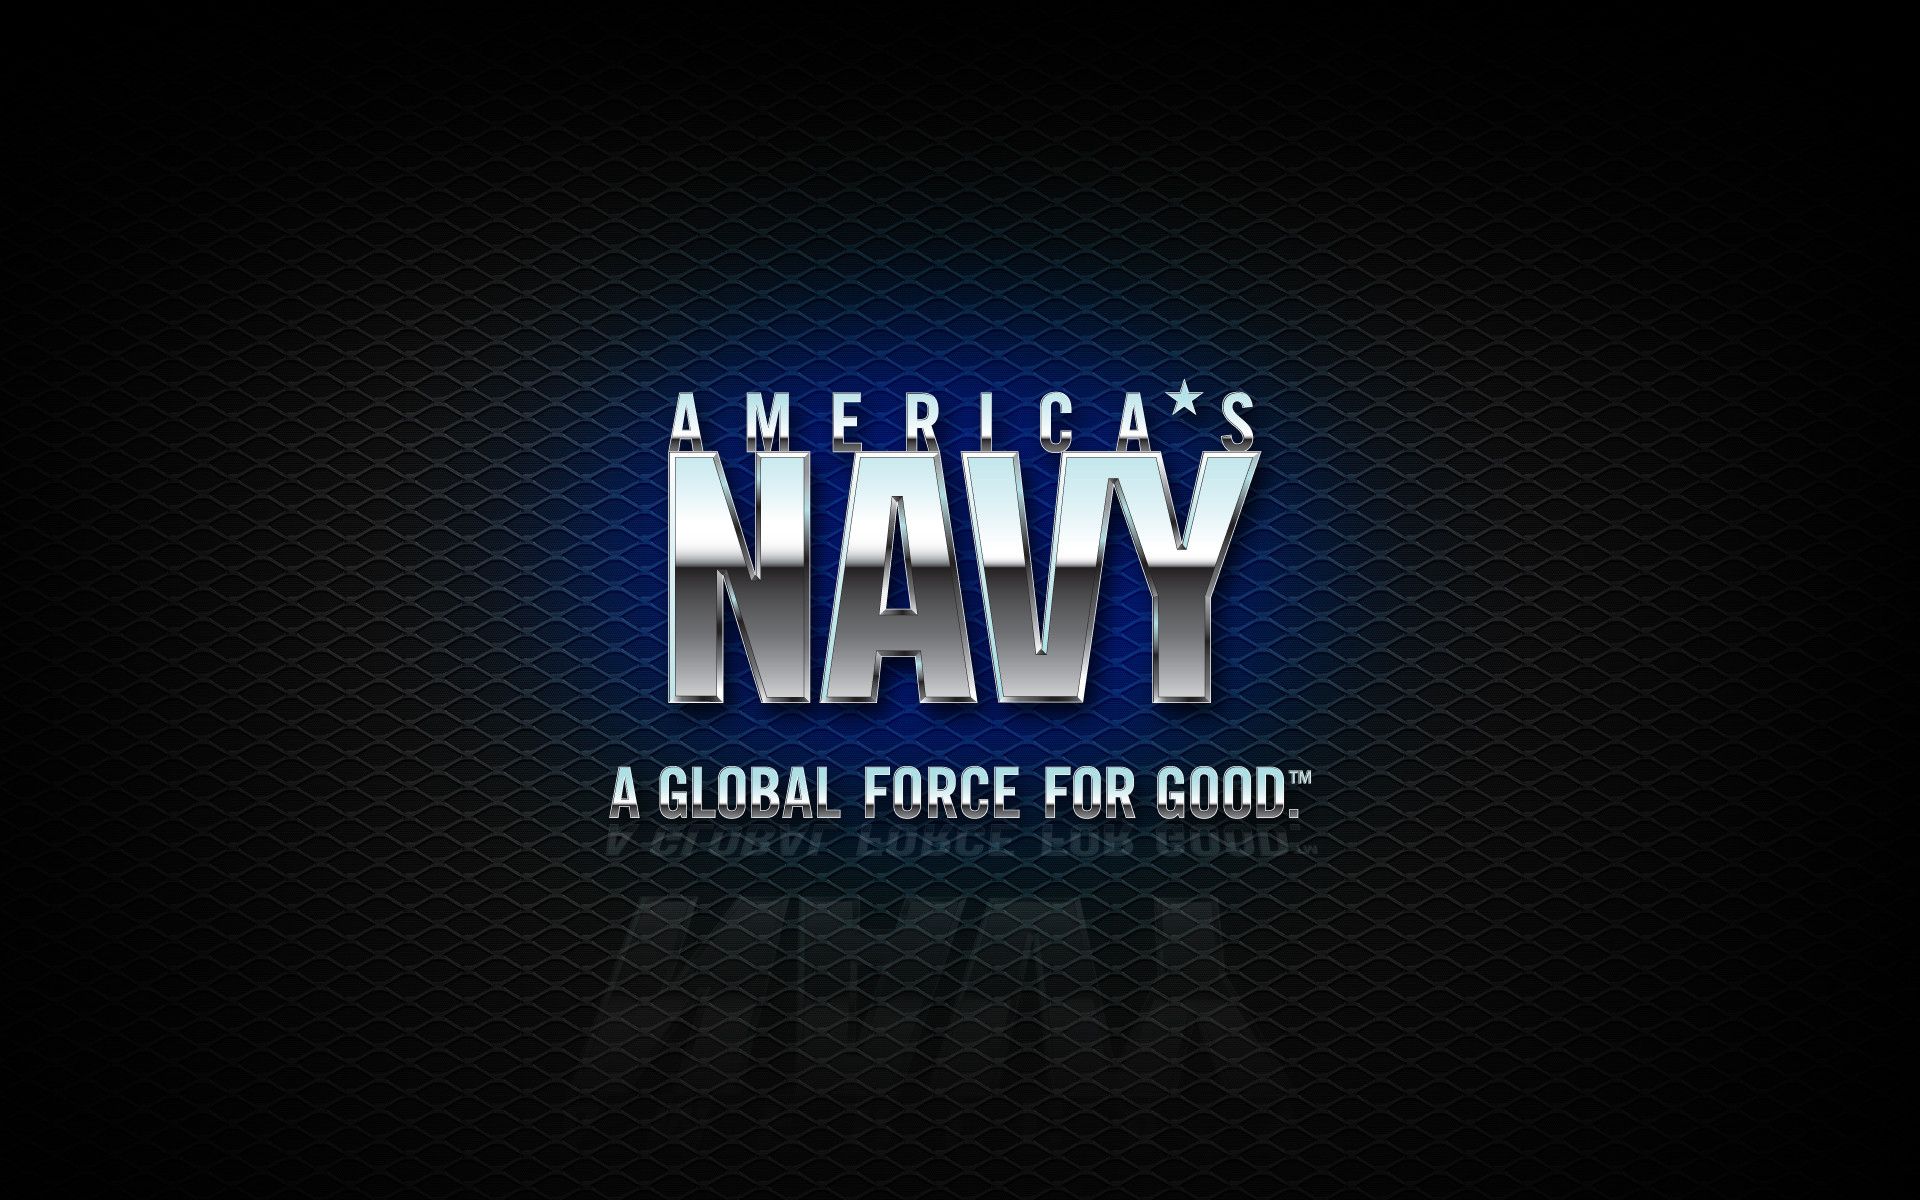 US Navy Image Logo Wallpaper